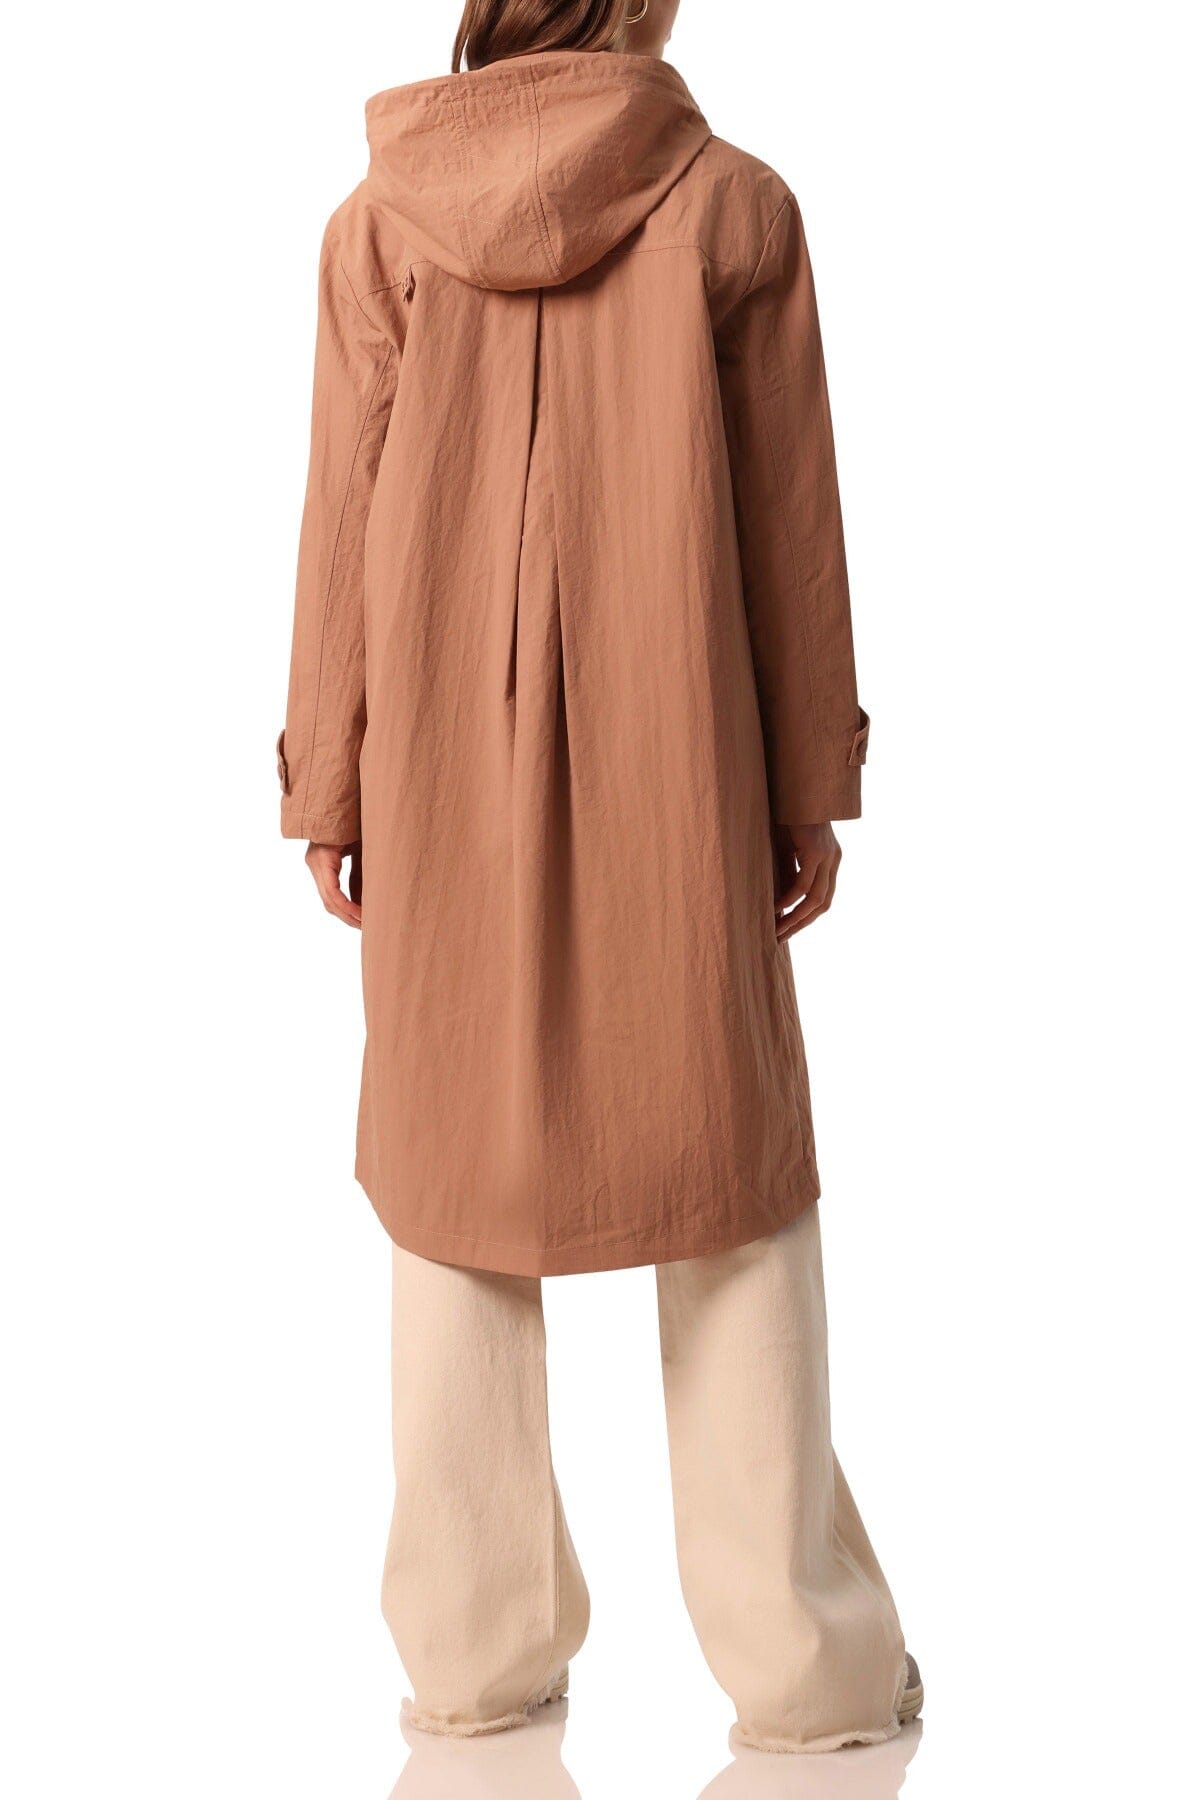 Oversized Nylon Hooded Rain Anorak Coats Jackets Avec Les Filles detachable hood Spring 2023 women's fashion outerwear Cameo Rose Brown